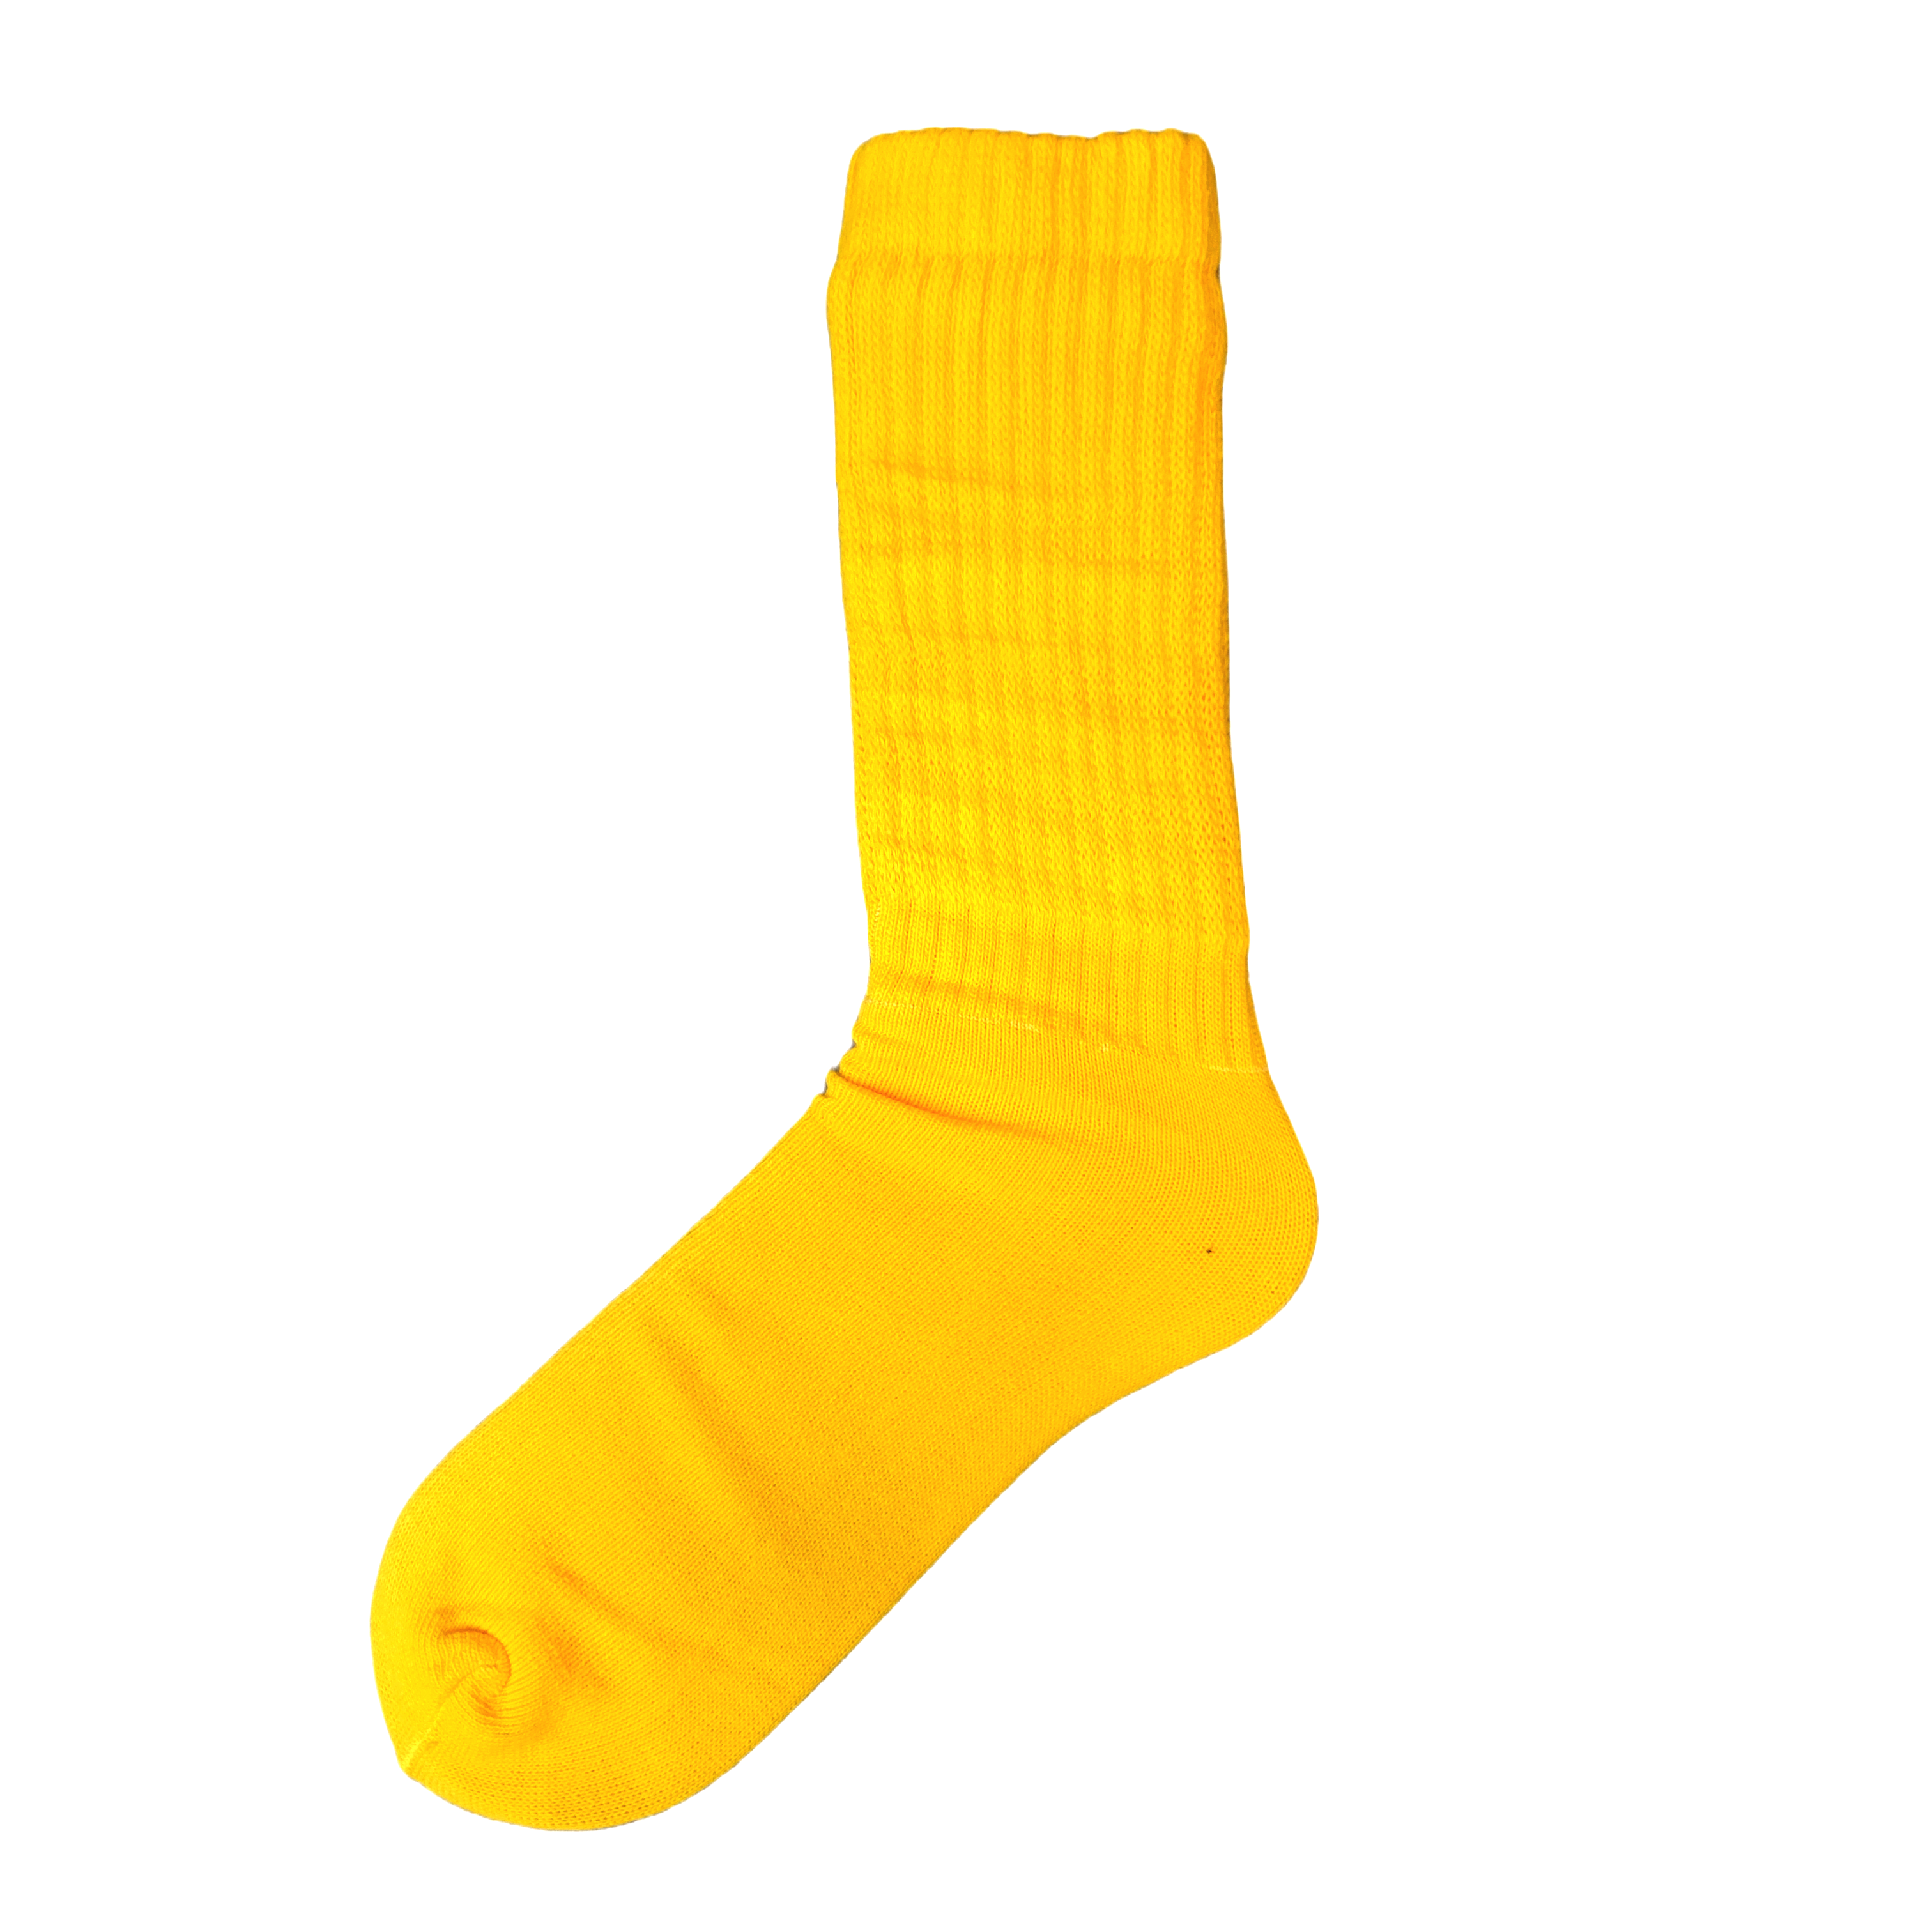 Yellow Slouch Socks (Adult Medium)